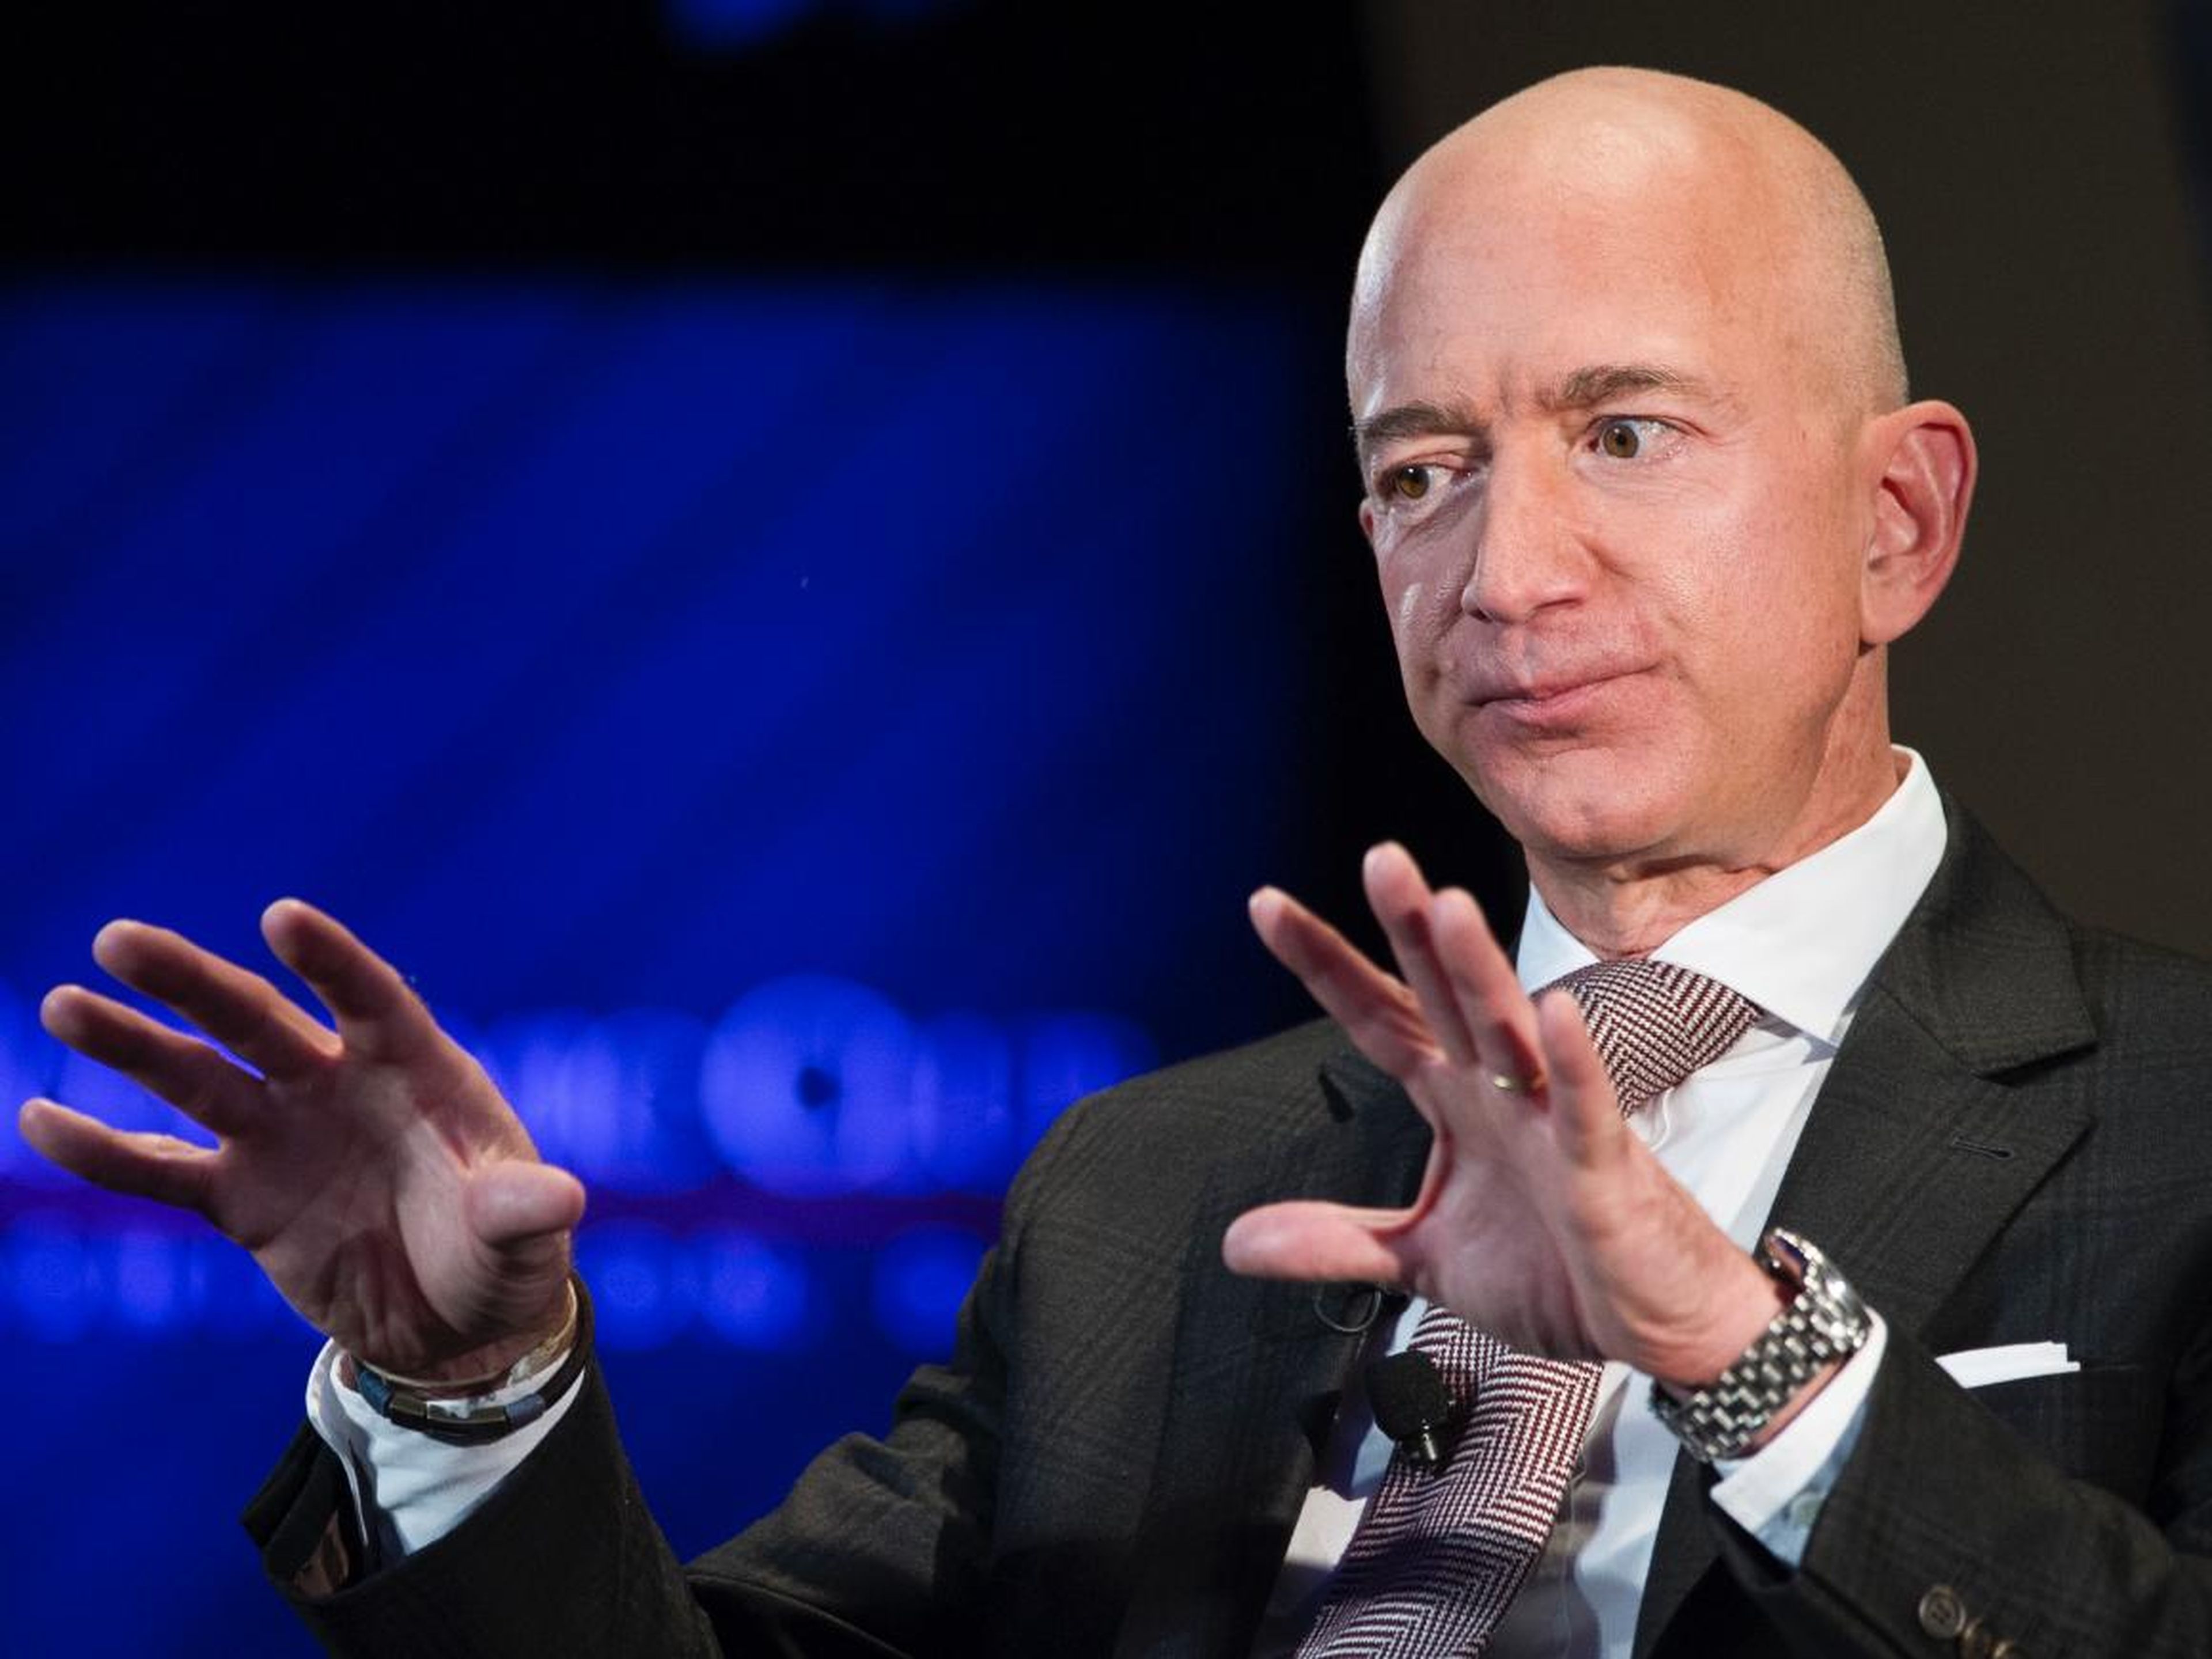 Amazon CEO Jeff Bezos.